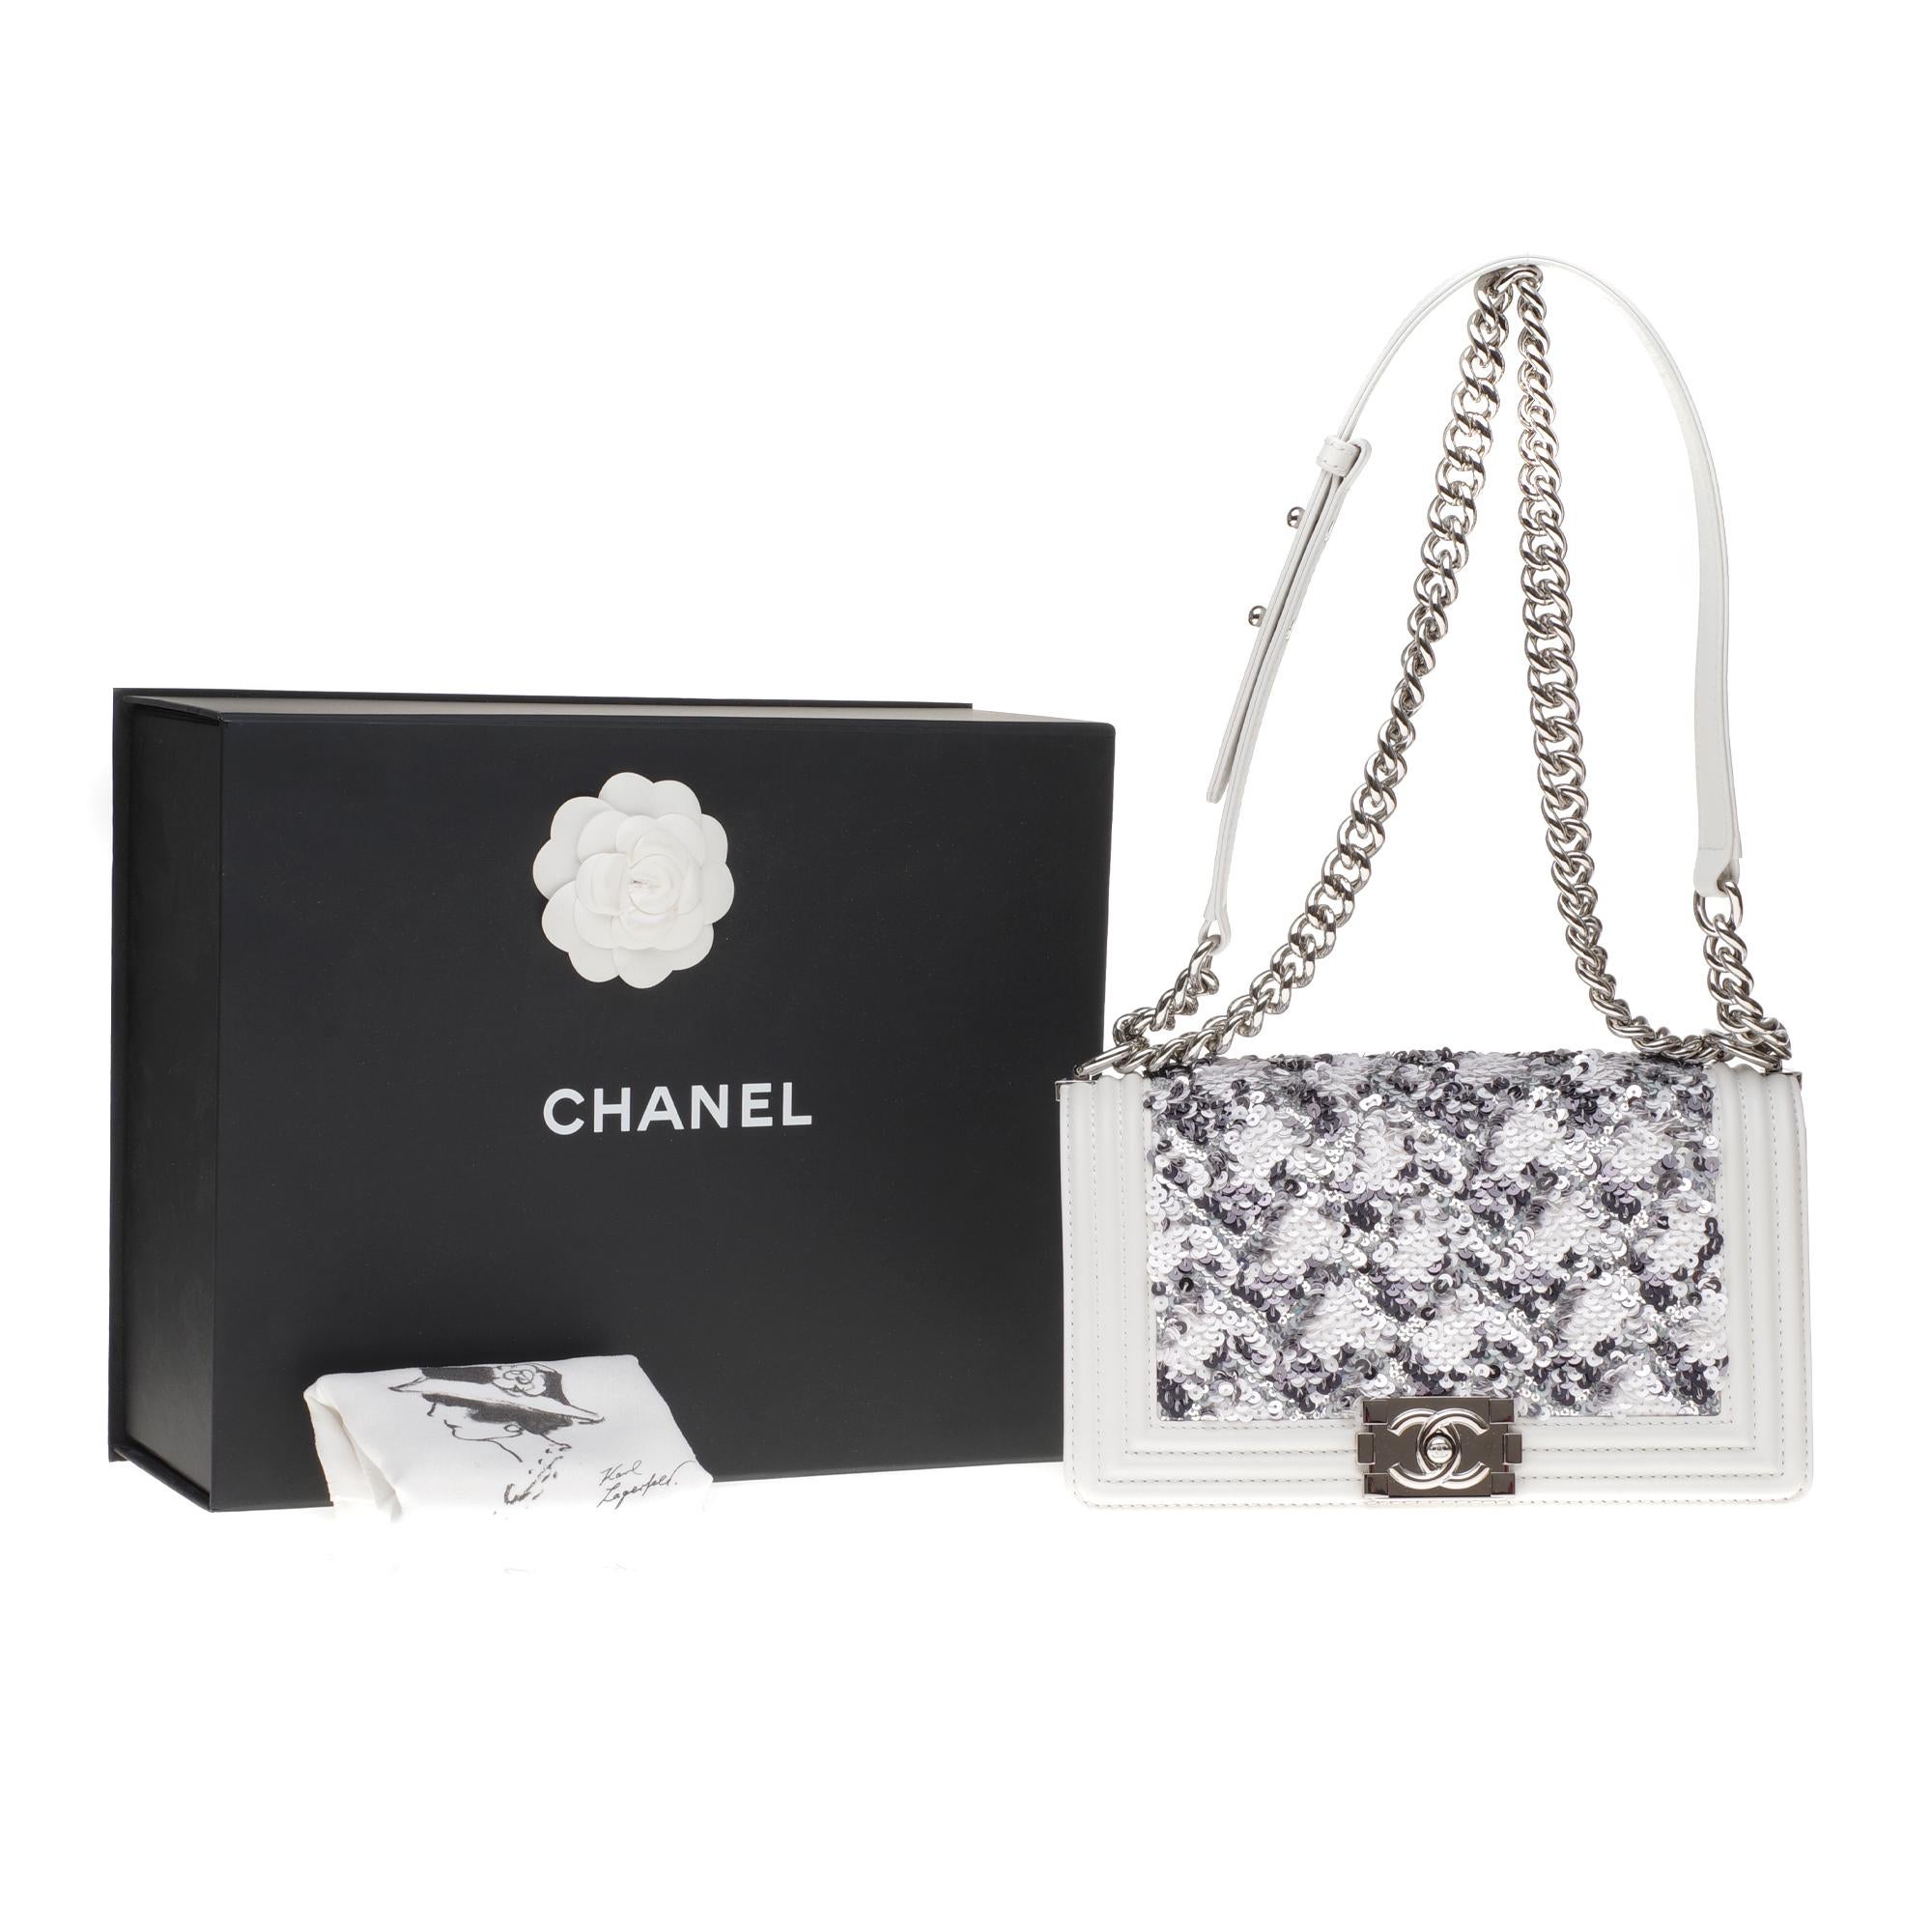 Chanel boy medium size shoulder bag in white and grey sequins, silver hardware 6